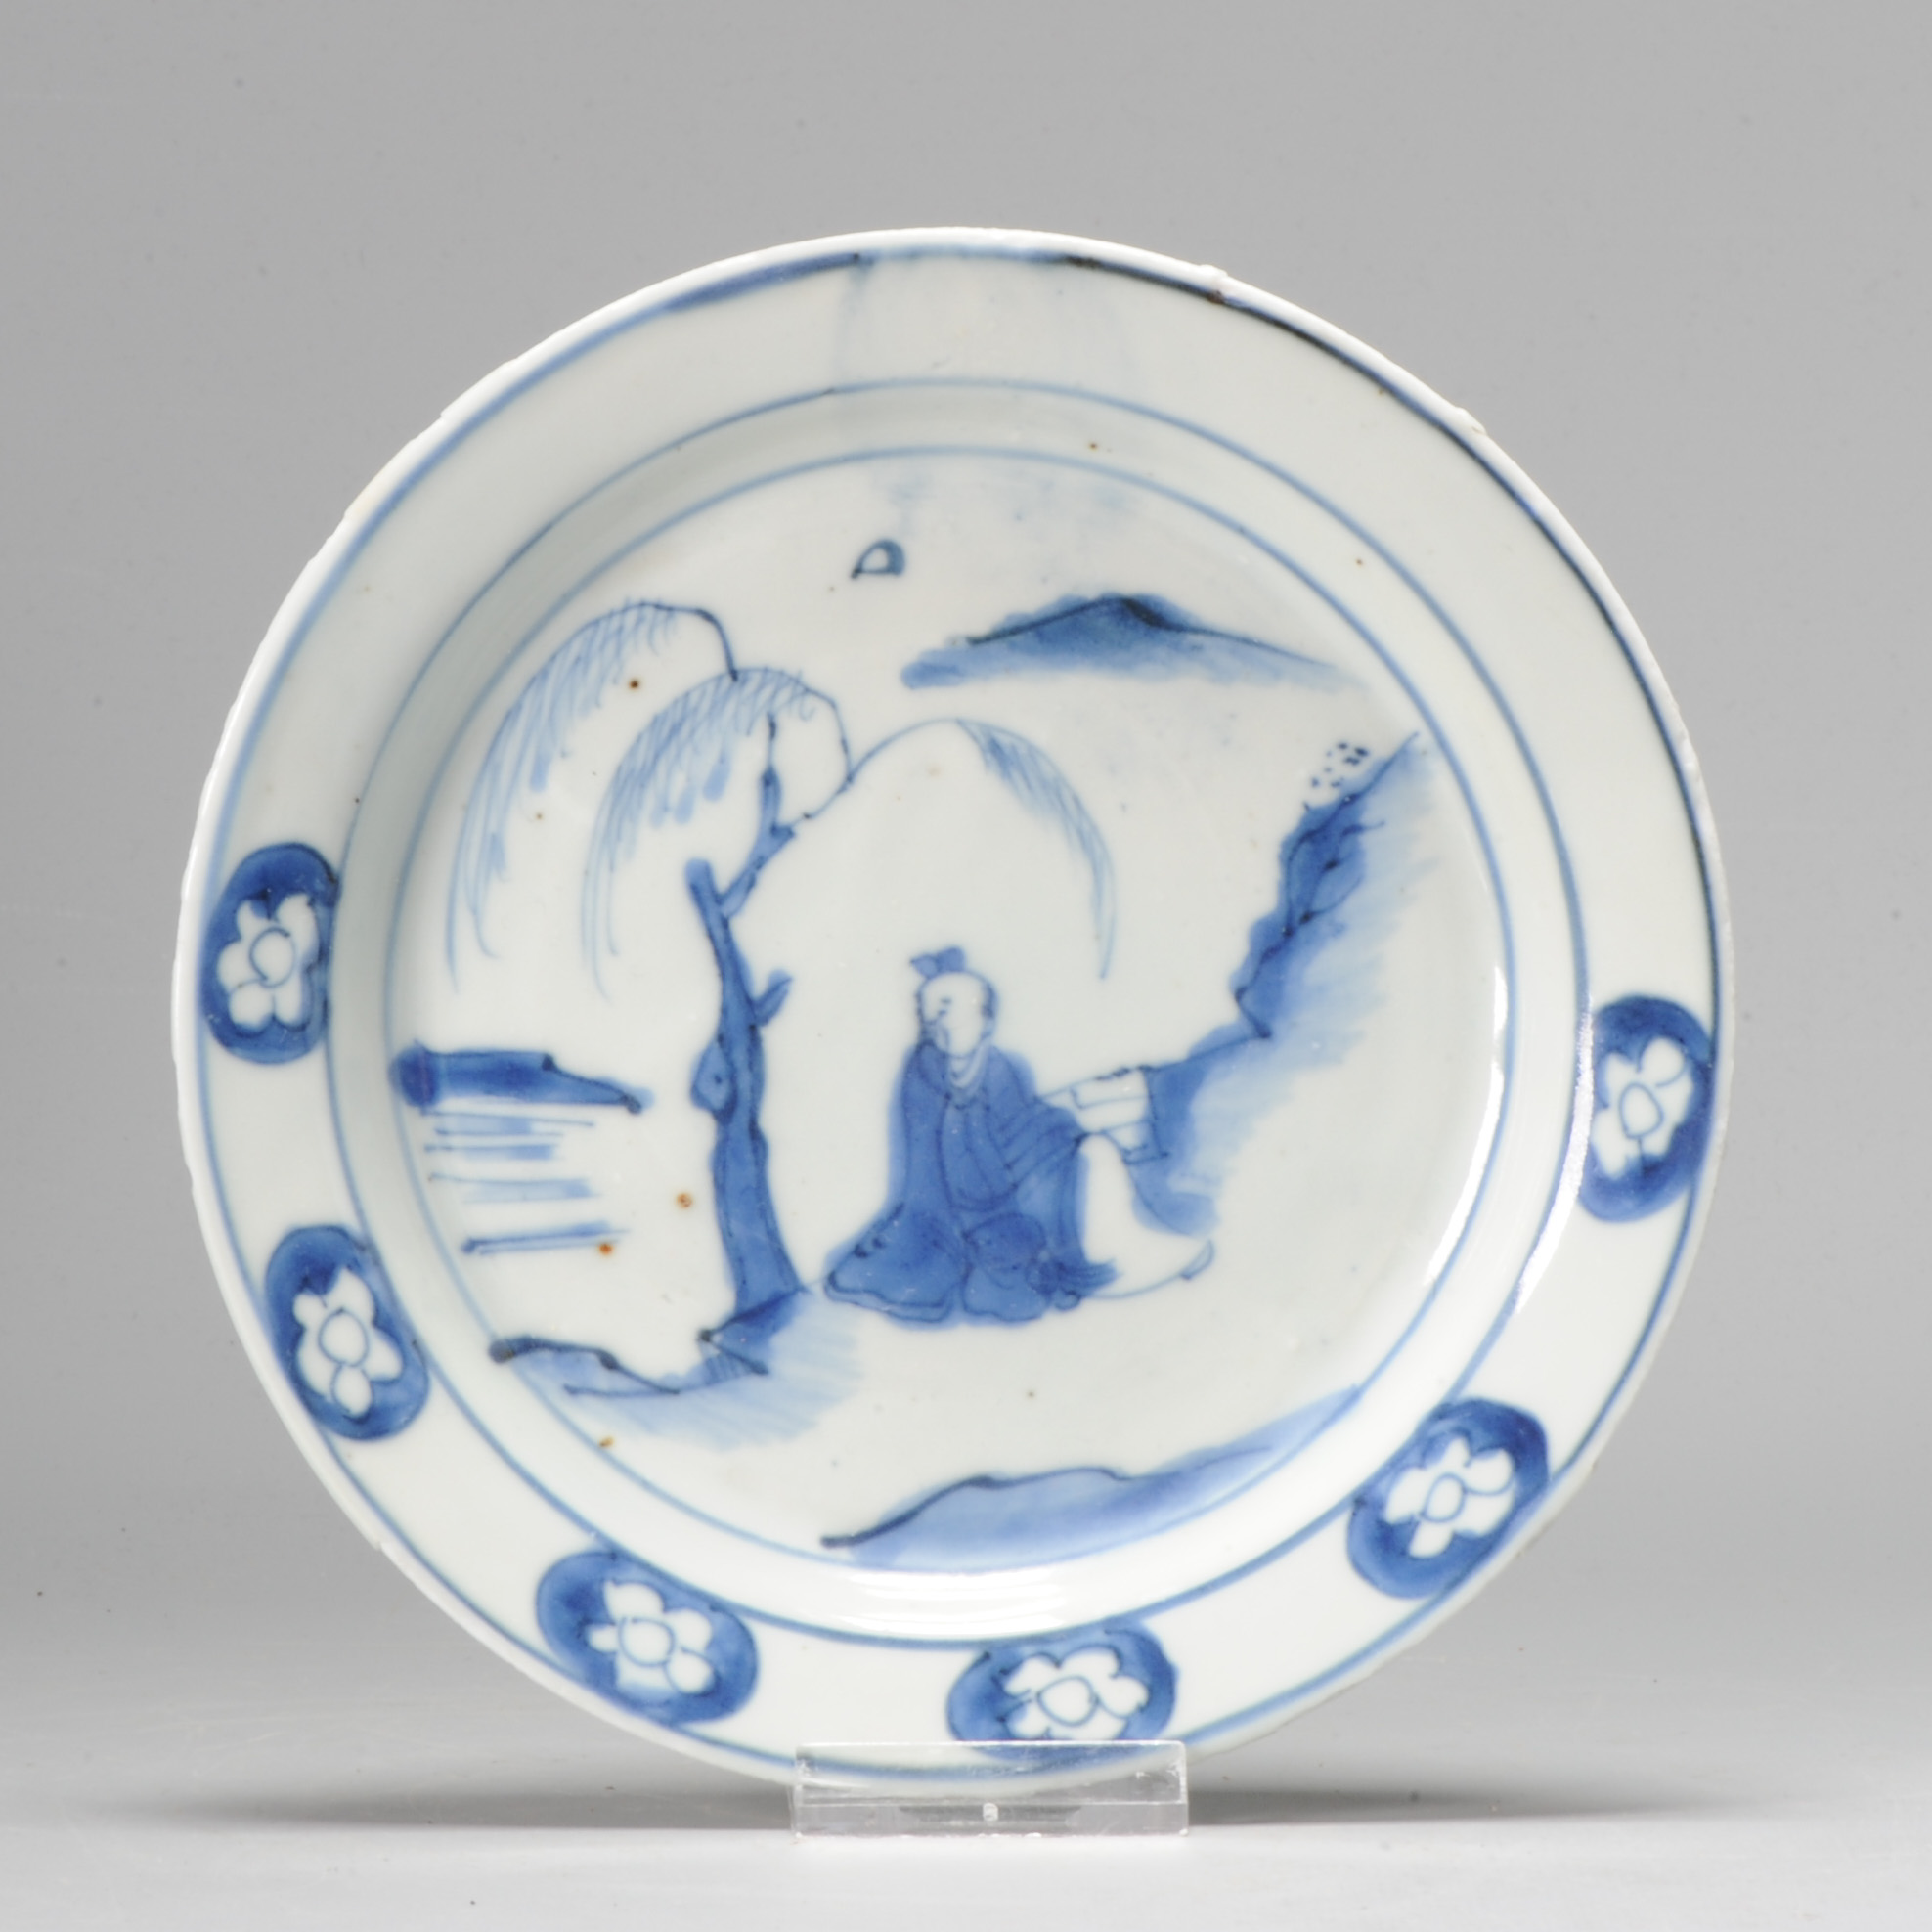 17C Chinese Porcelain Ming Period Kosometsuk Plate Dish Literatus Chenghua Marked